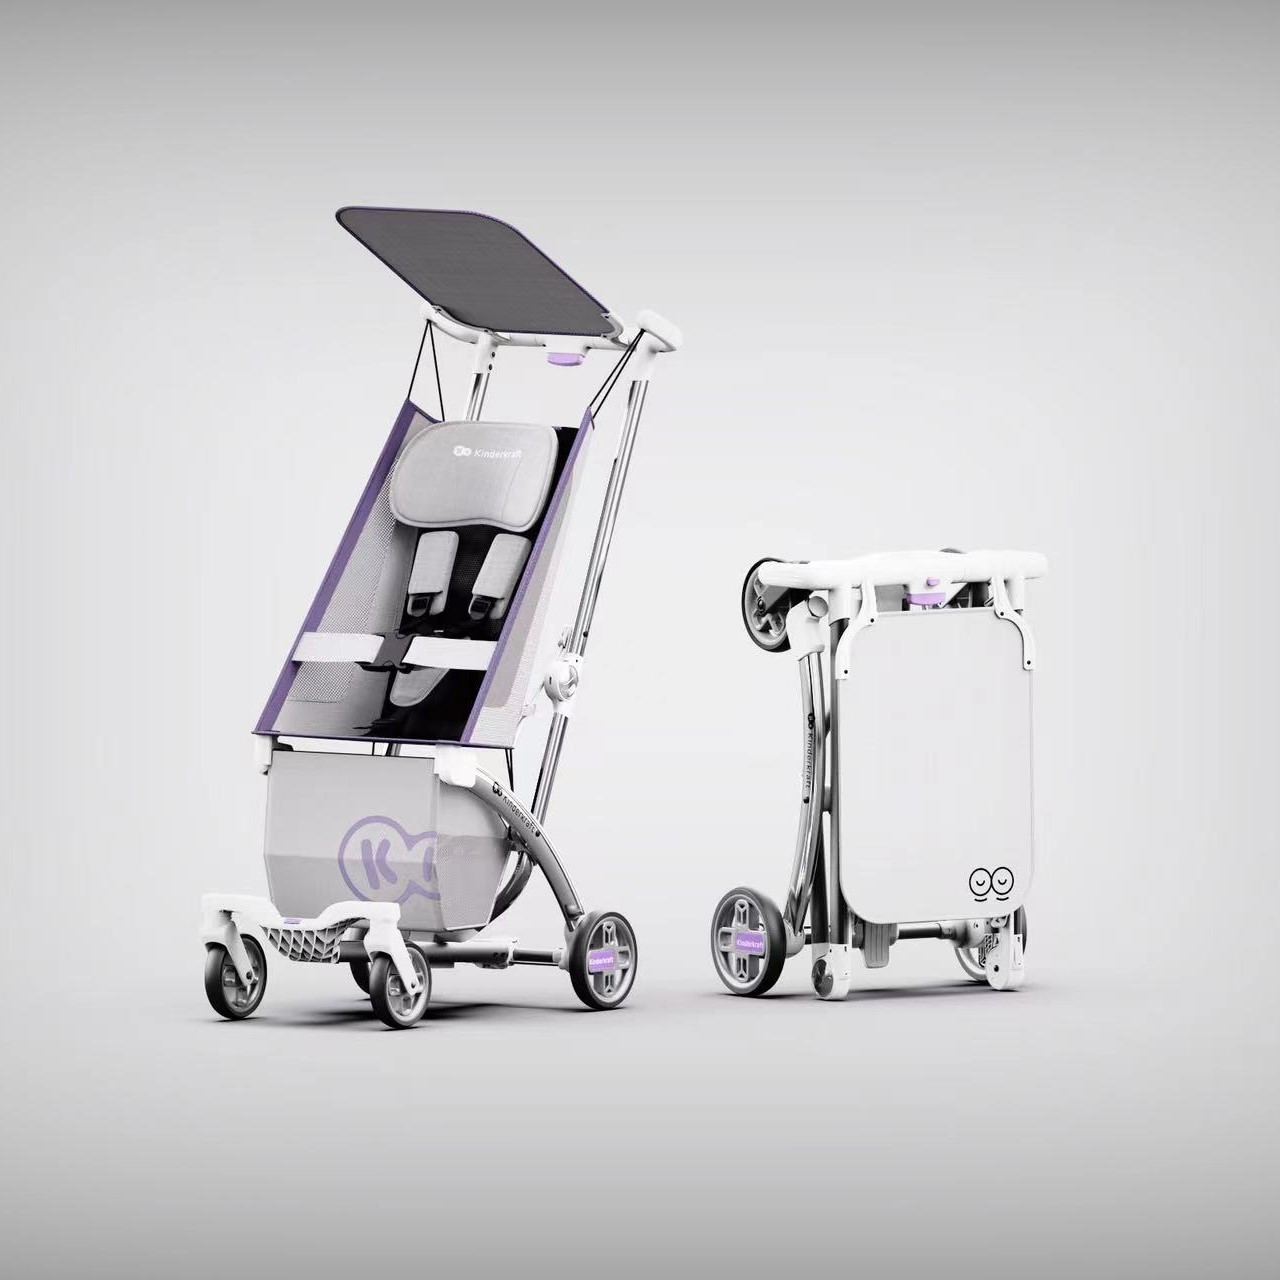 Kinderkraft KP2 Compact Stroller